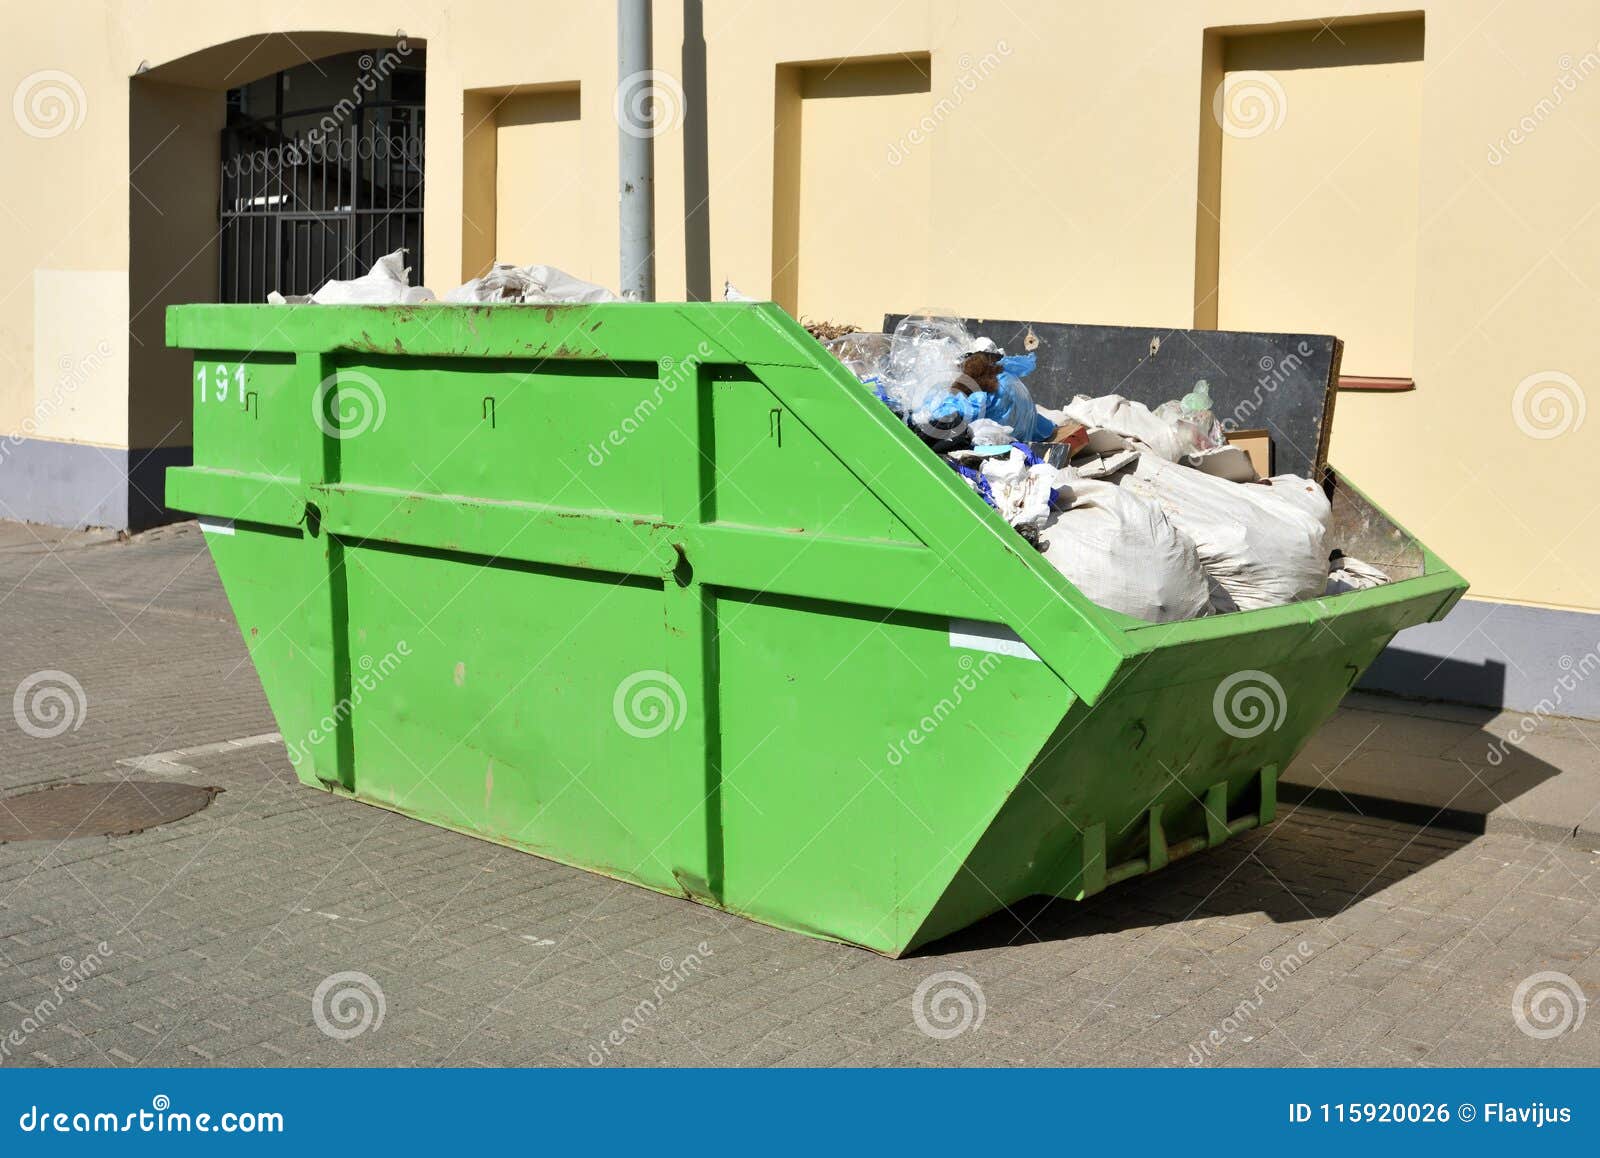 green skip dumpster for municipal waste